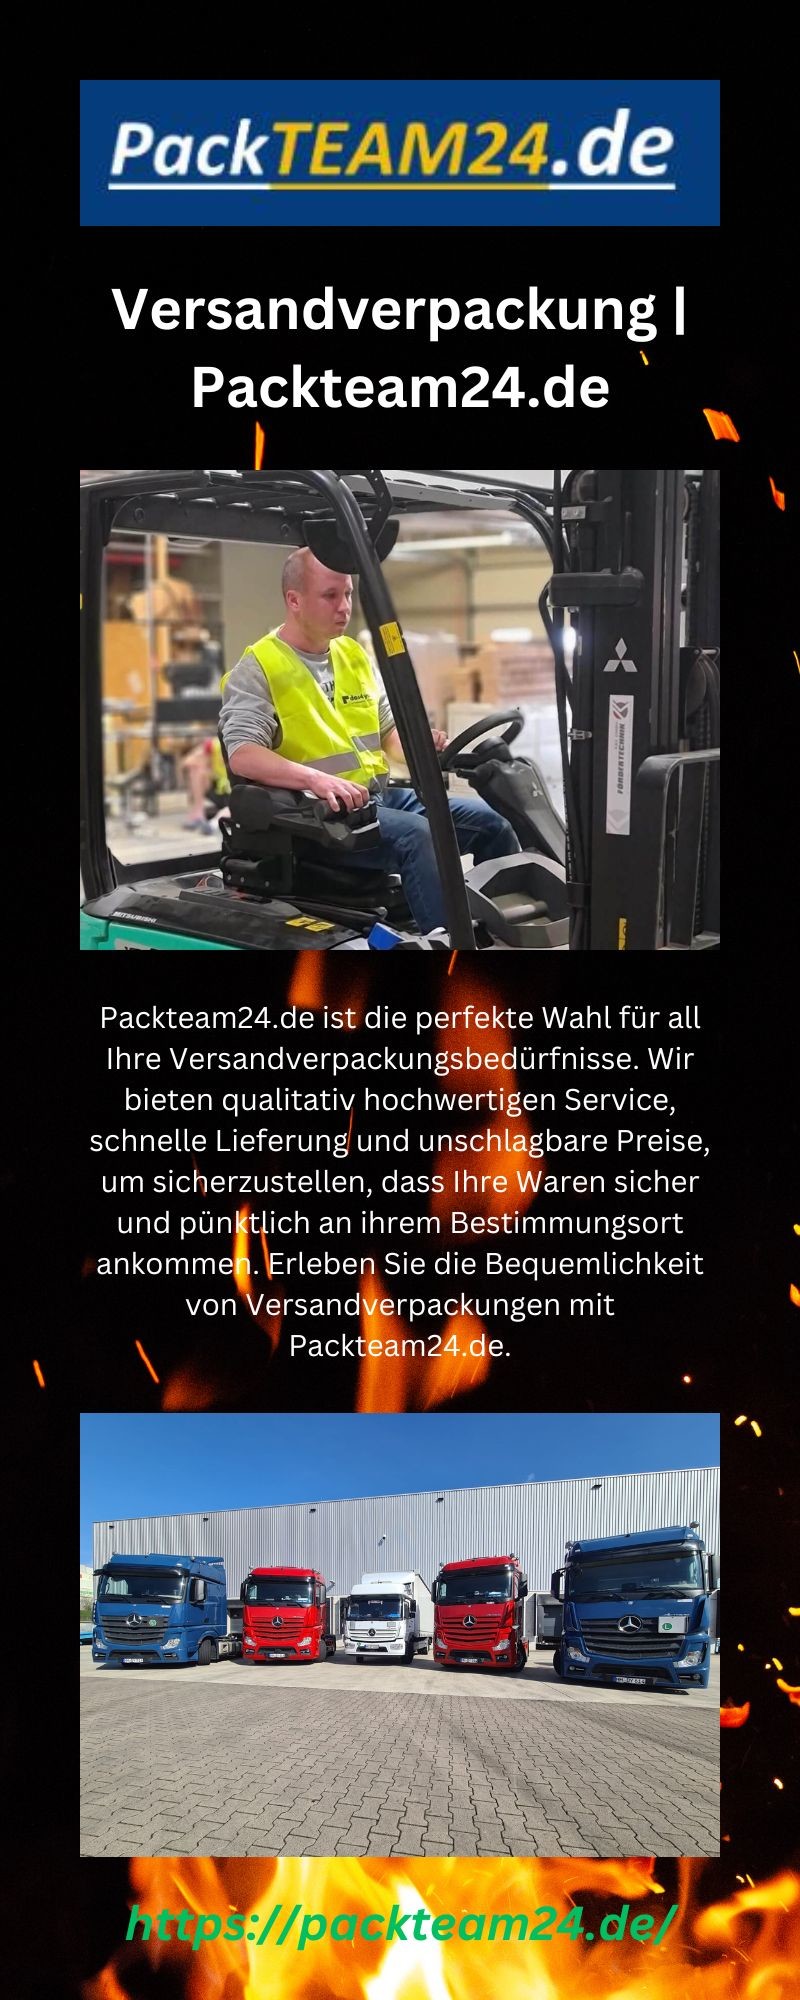 packteam24: "Versandverpackung | Packteam24.de  Packteam24.de …" - mastodon.cloud